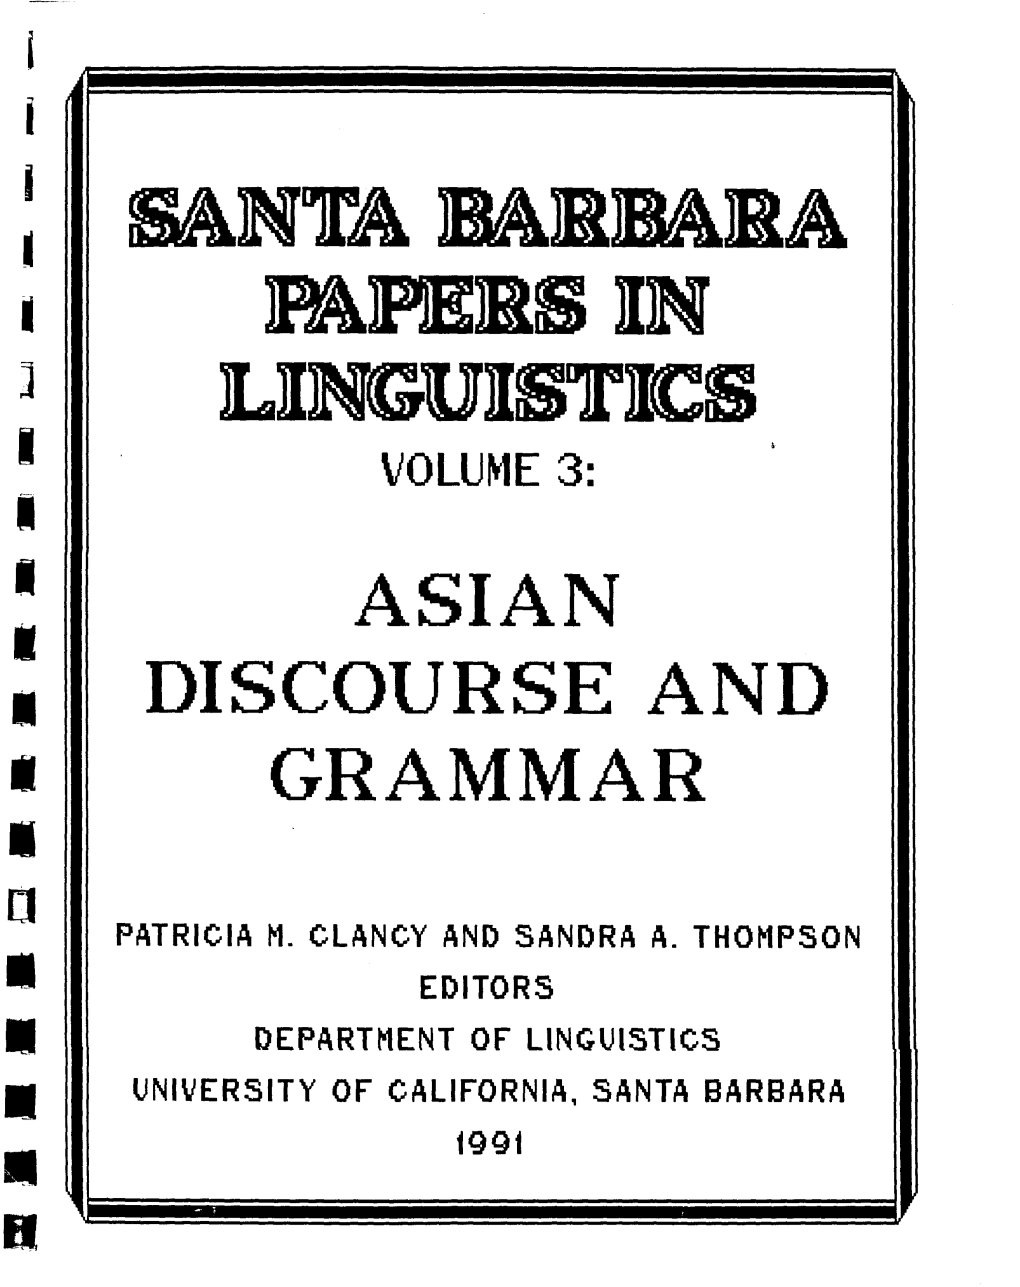 Asian Discourse and Grammar